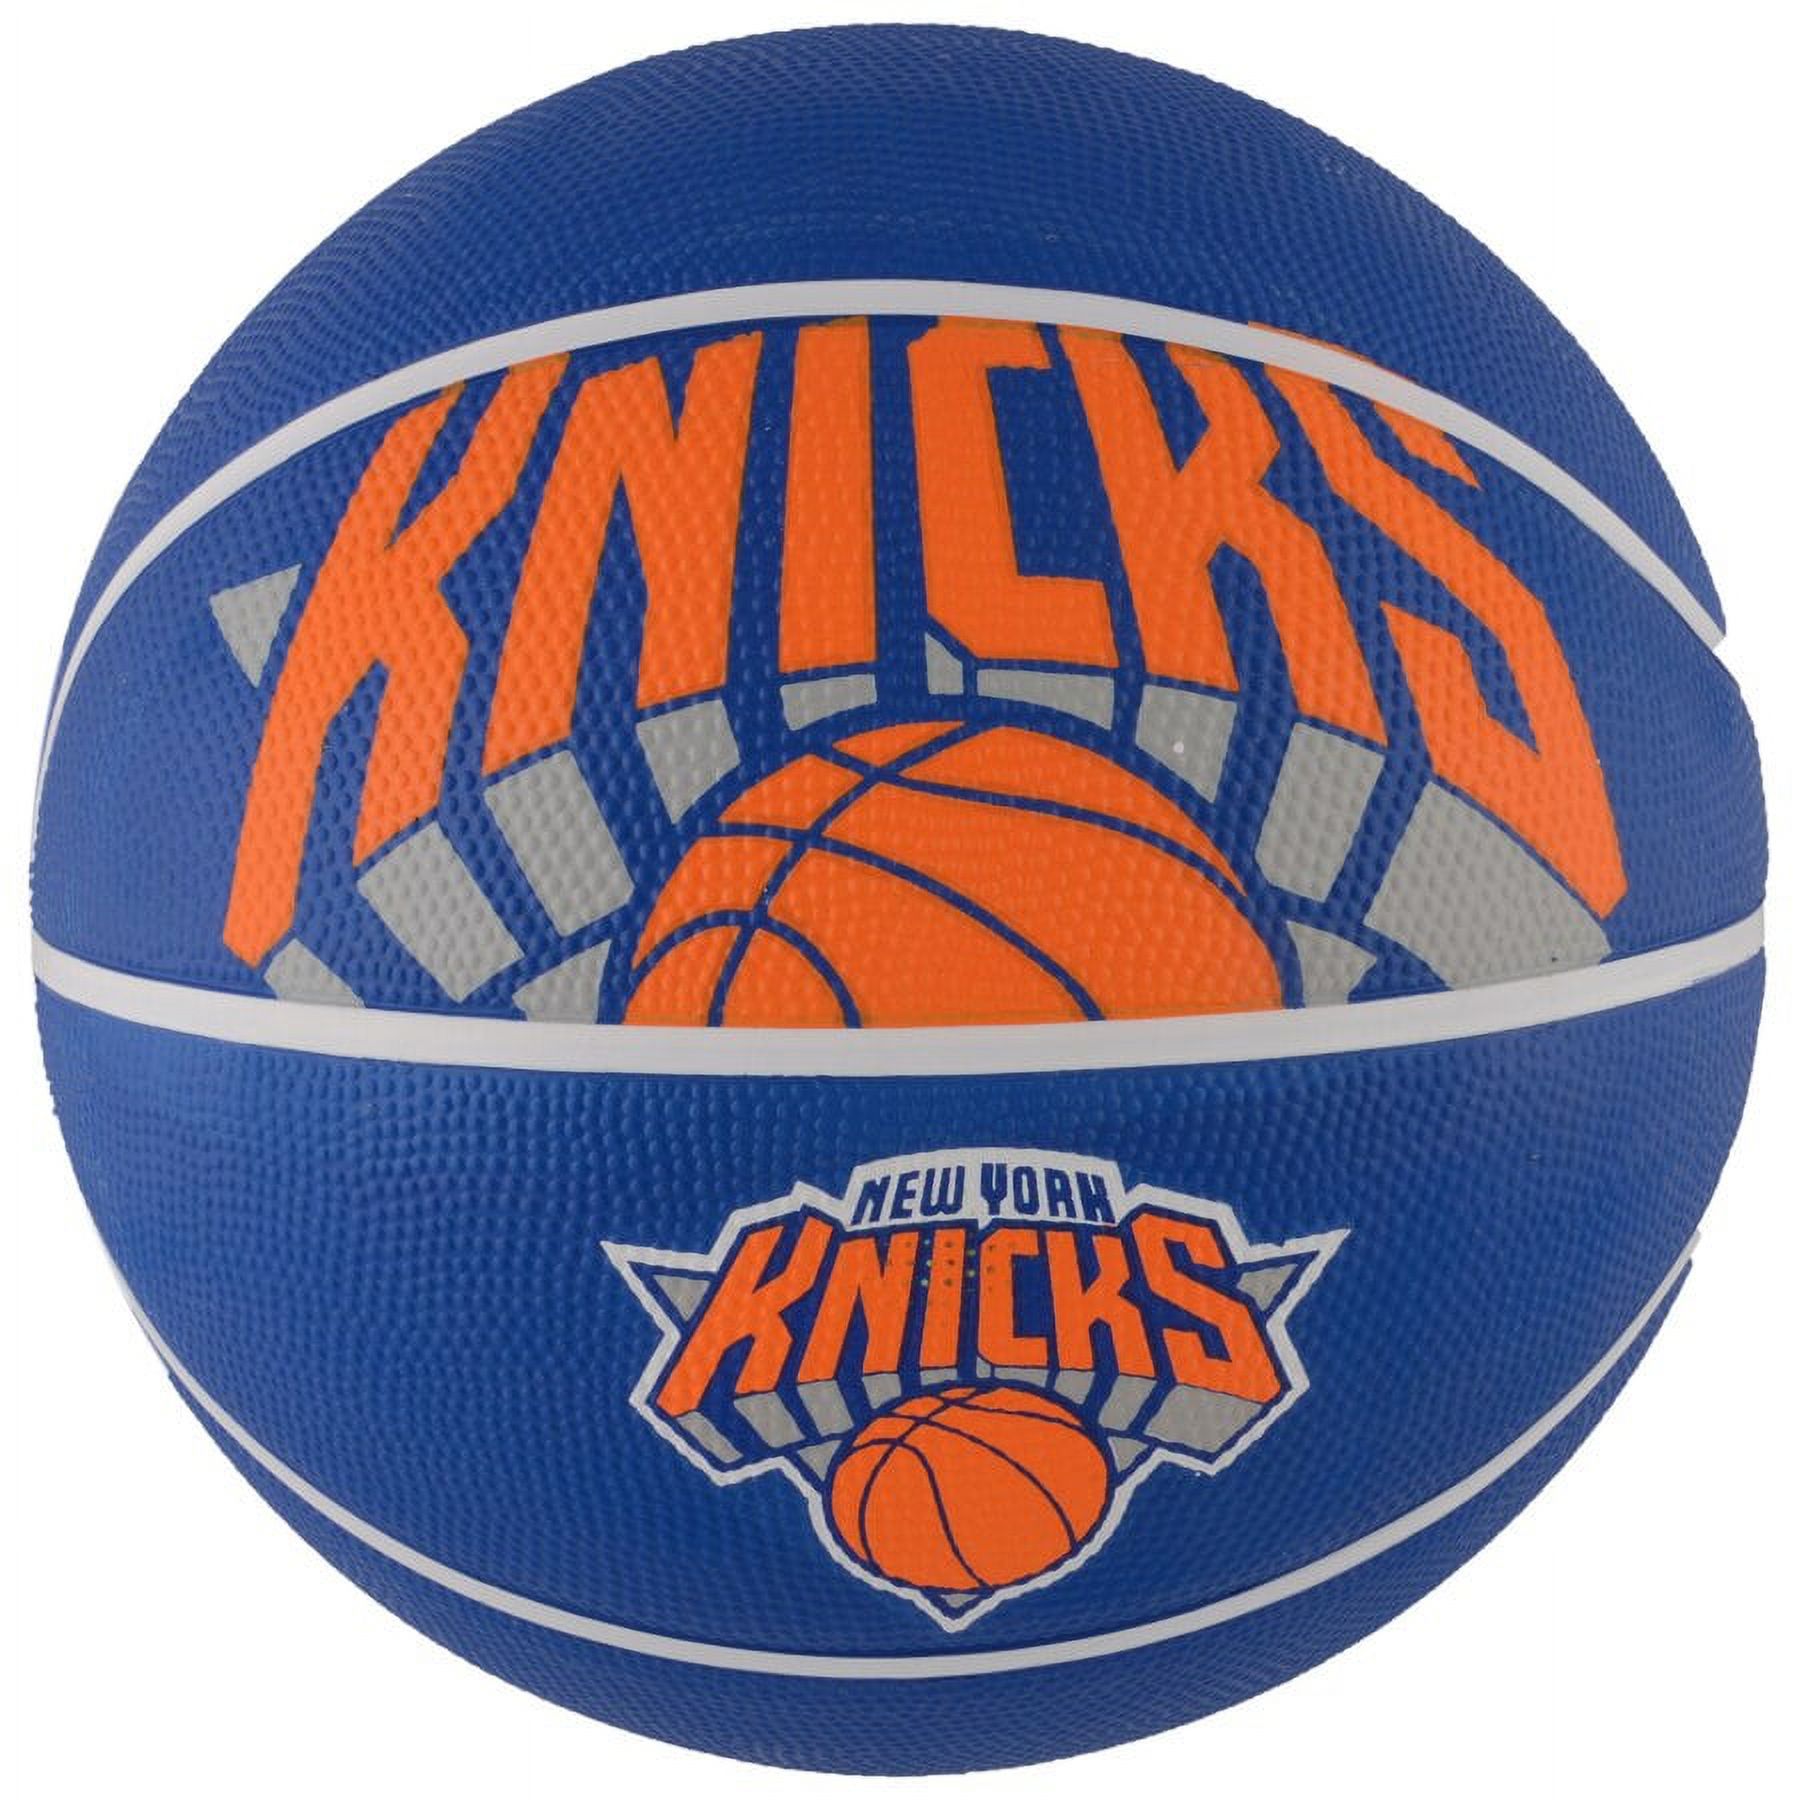 Spalding NBA New York Knicks Team Logo Basketball - image 1 of 2